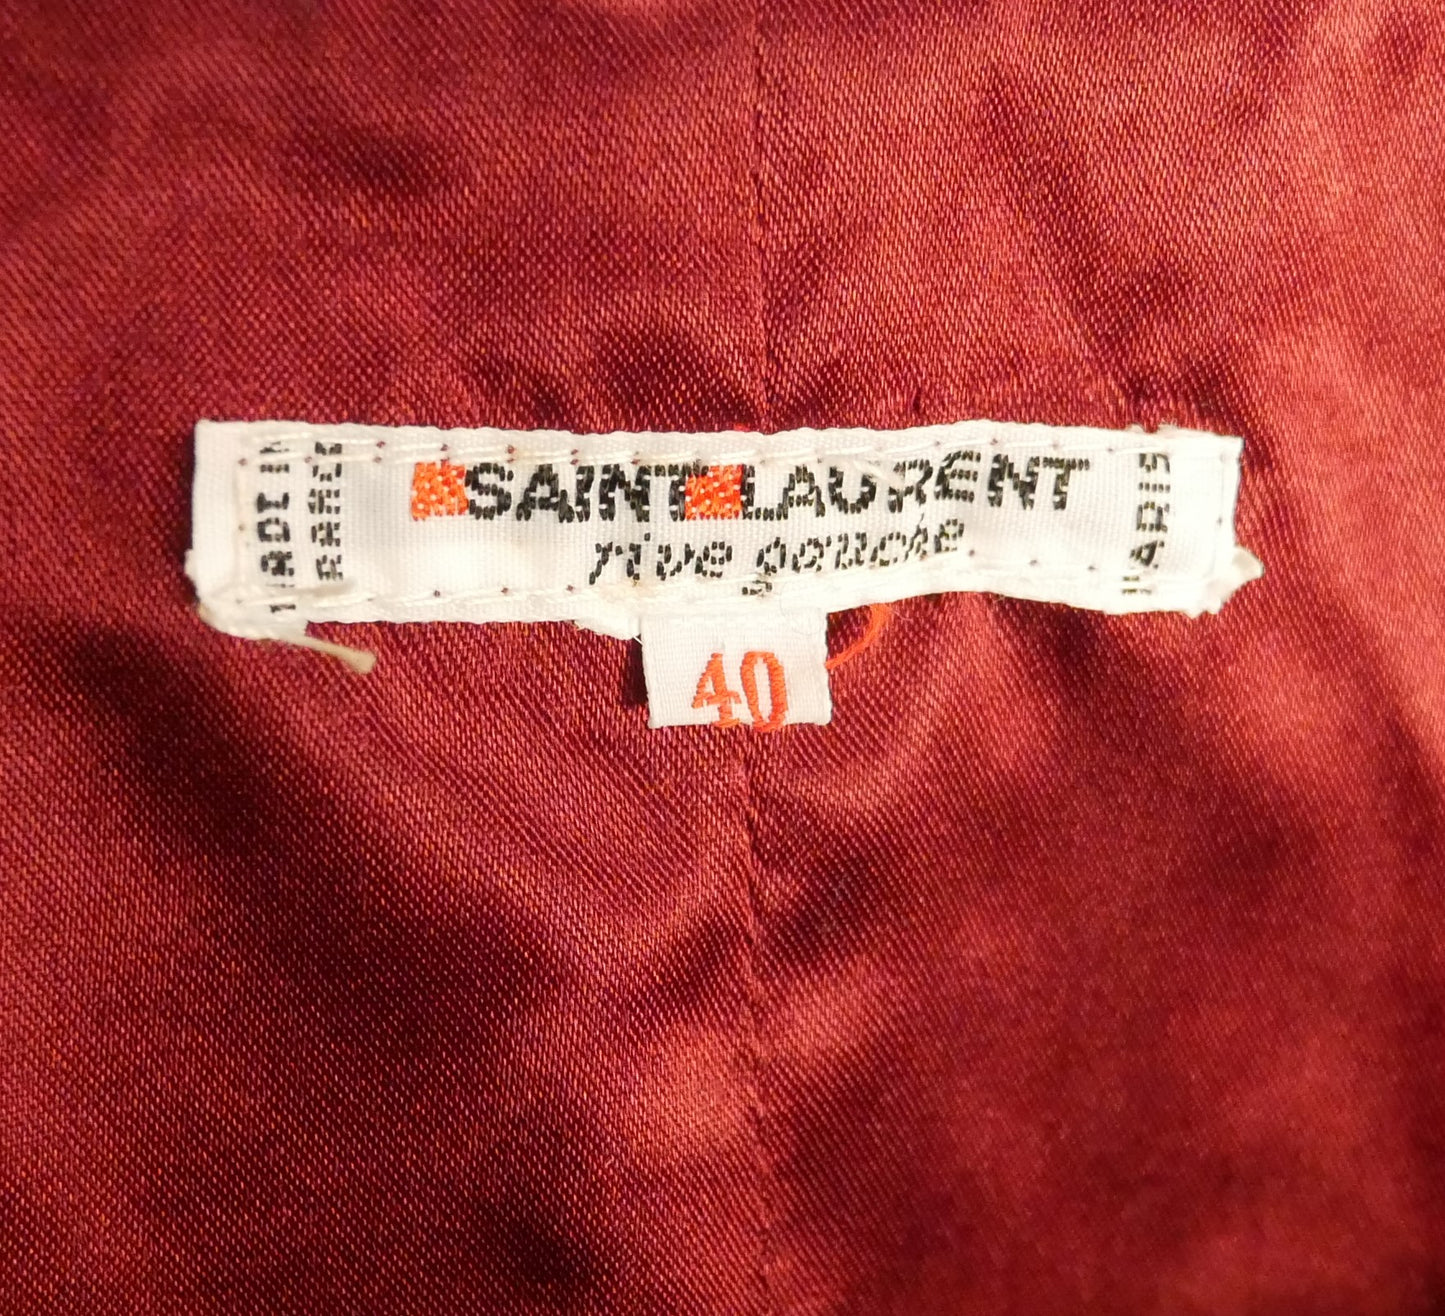 Saint laurent Rive Gauche vintage top in burgundy velvet - S - 1970s